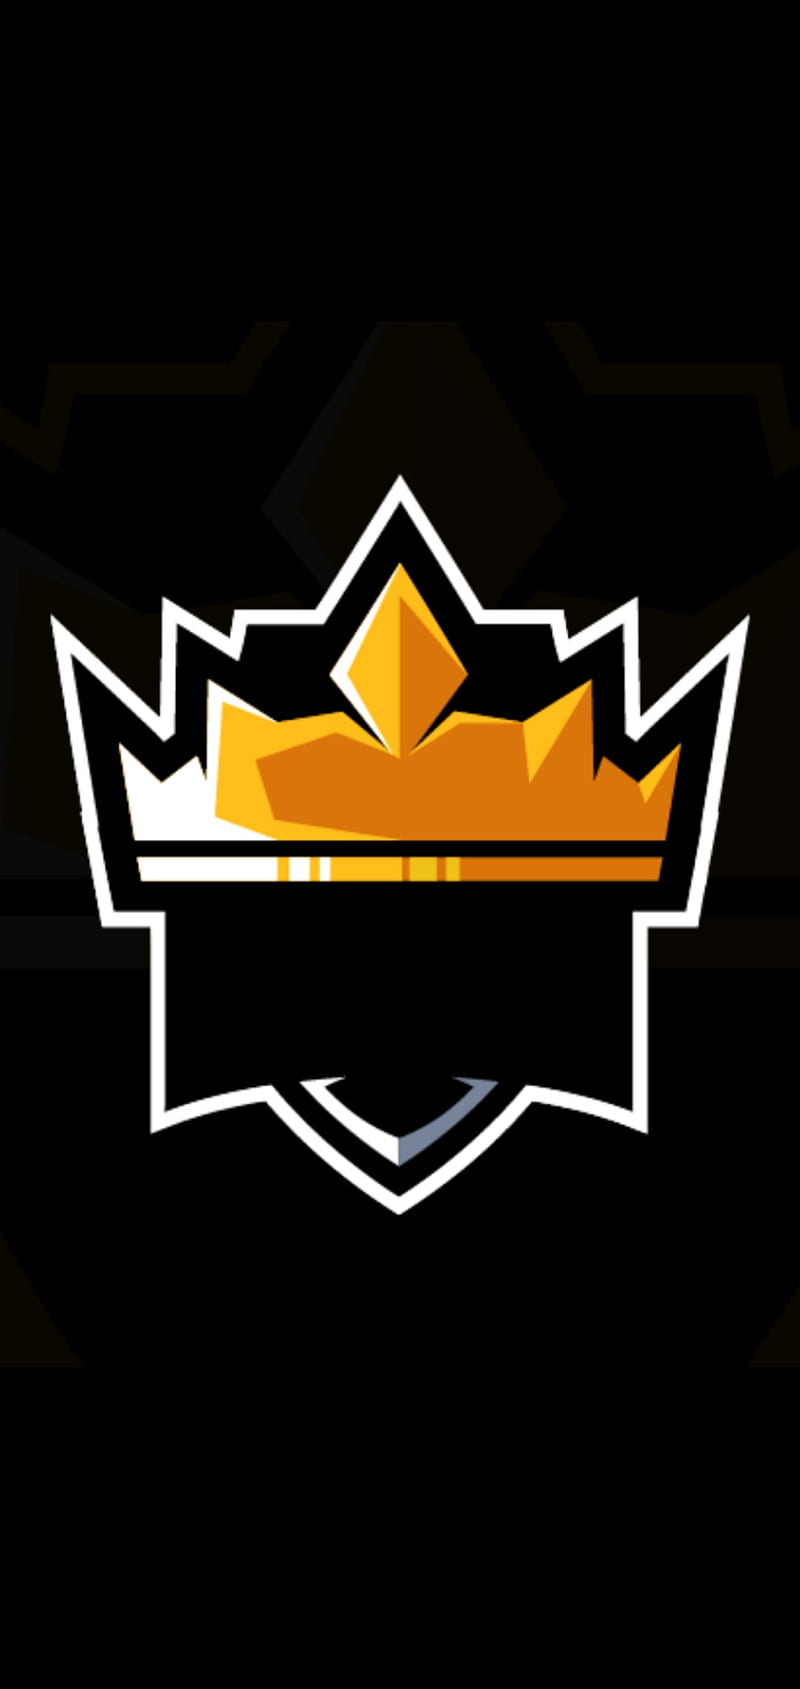 King logo stock vector. Illustration of kingdom, concept - 199046763